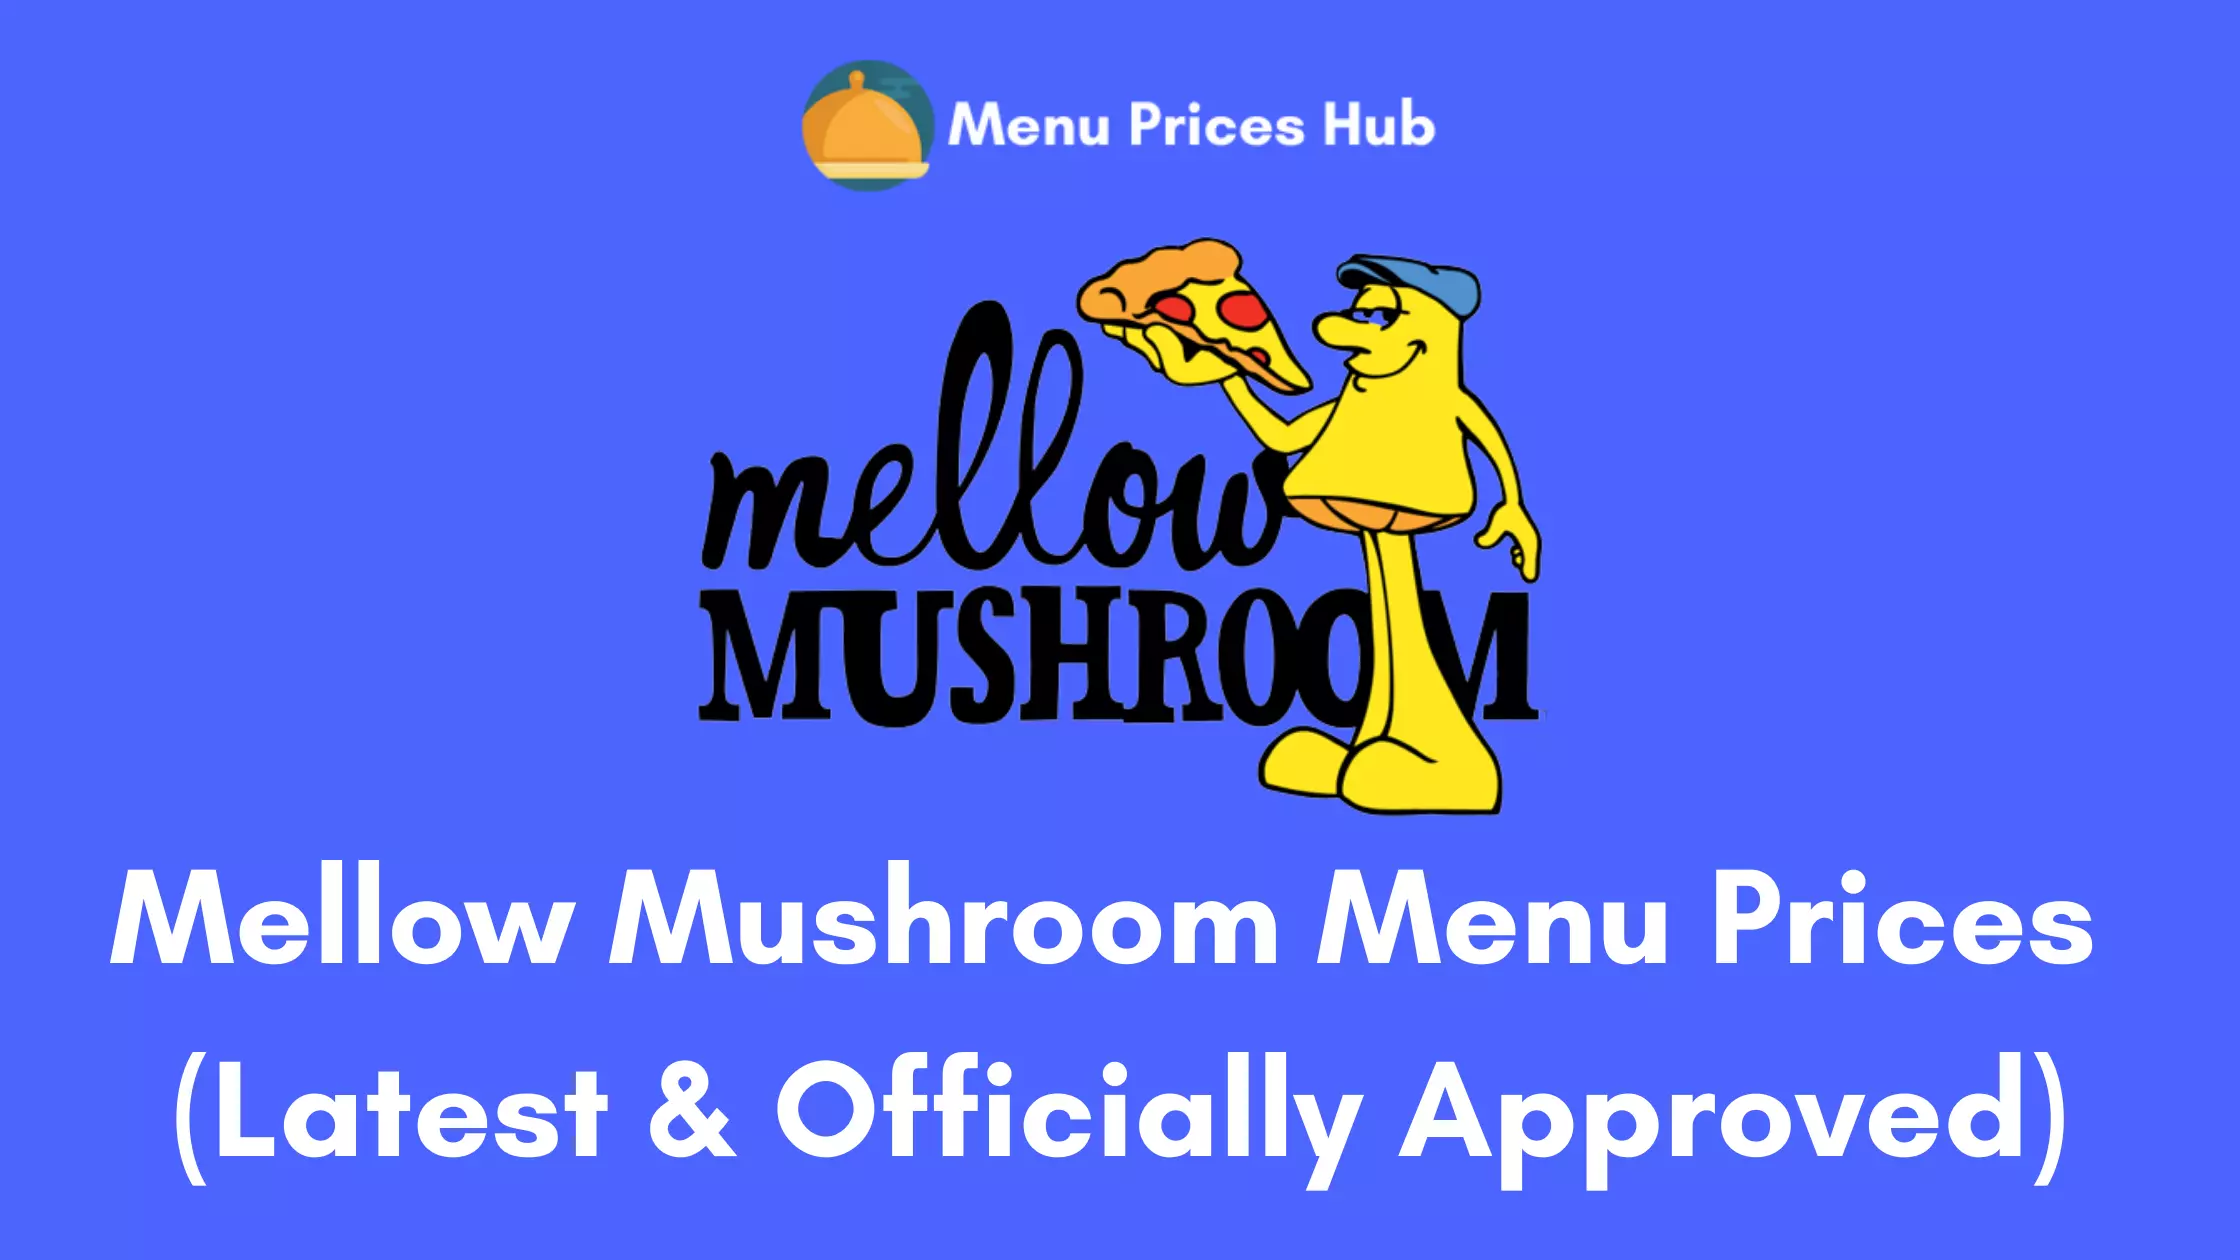 Mellow Mushroom menu prices